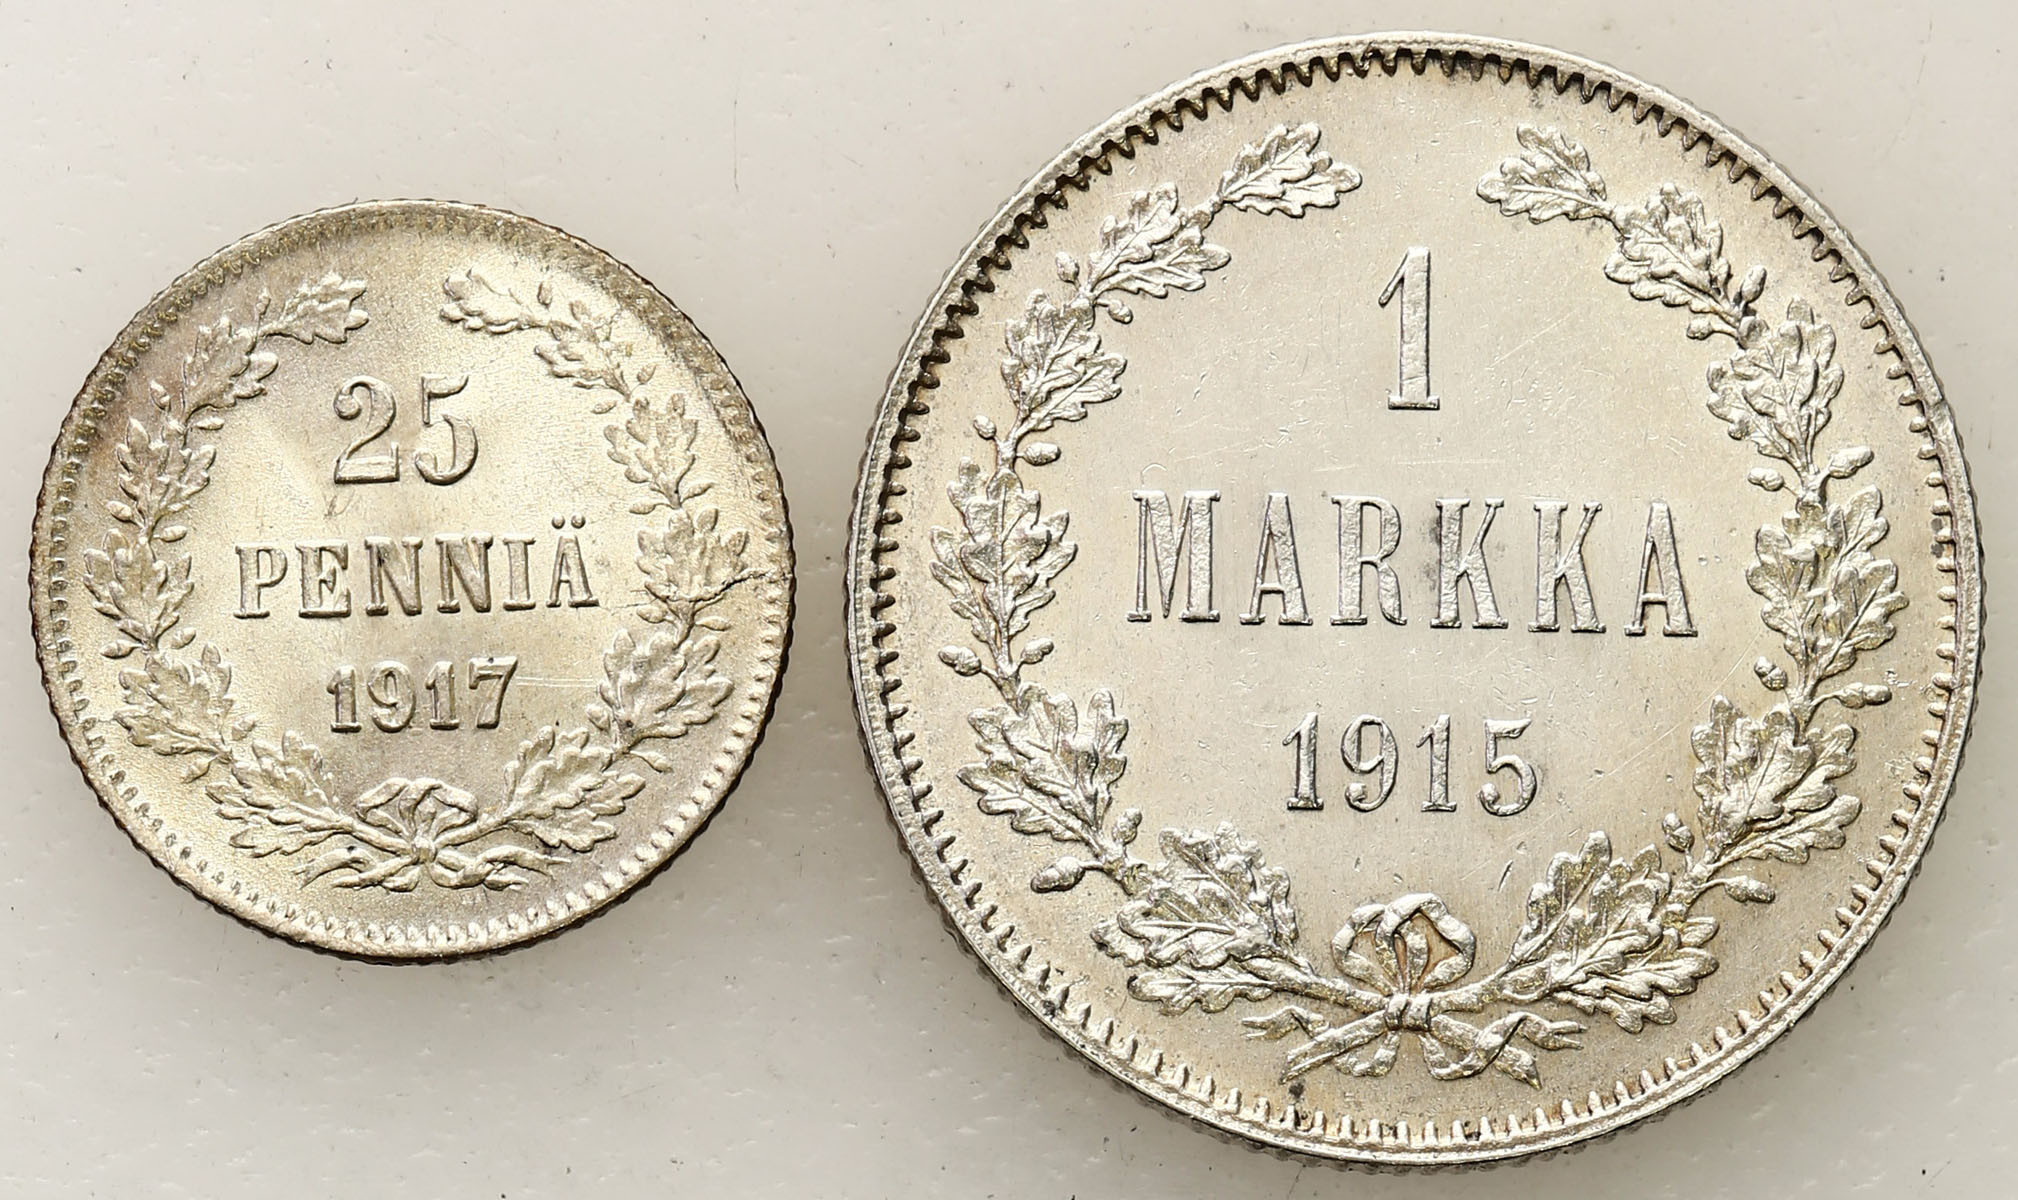 Rosja, Finlandia, Mikołaj II. 25 pennia 1917, 1 markka 1915, zestaw 2 monet